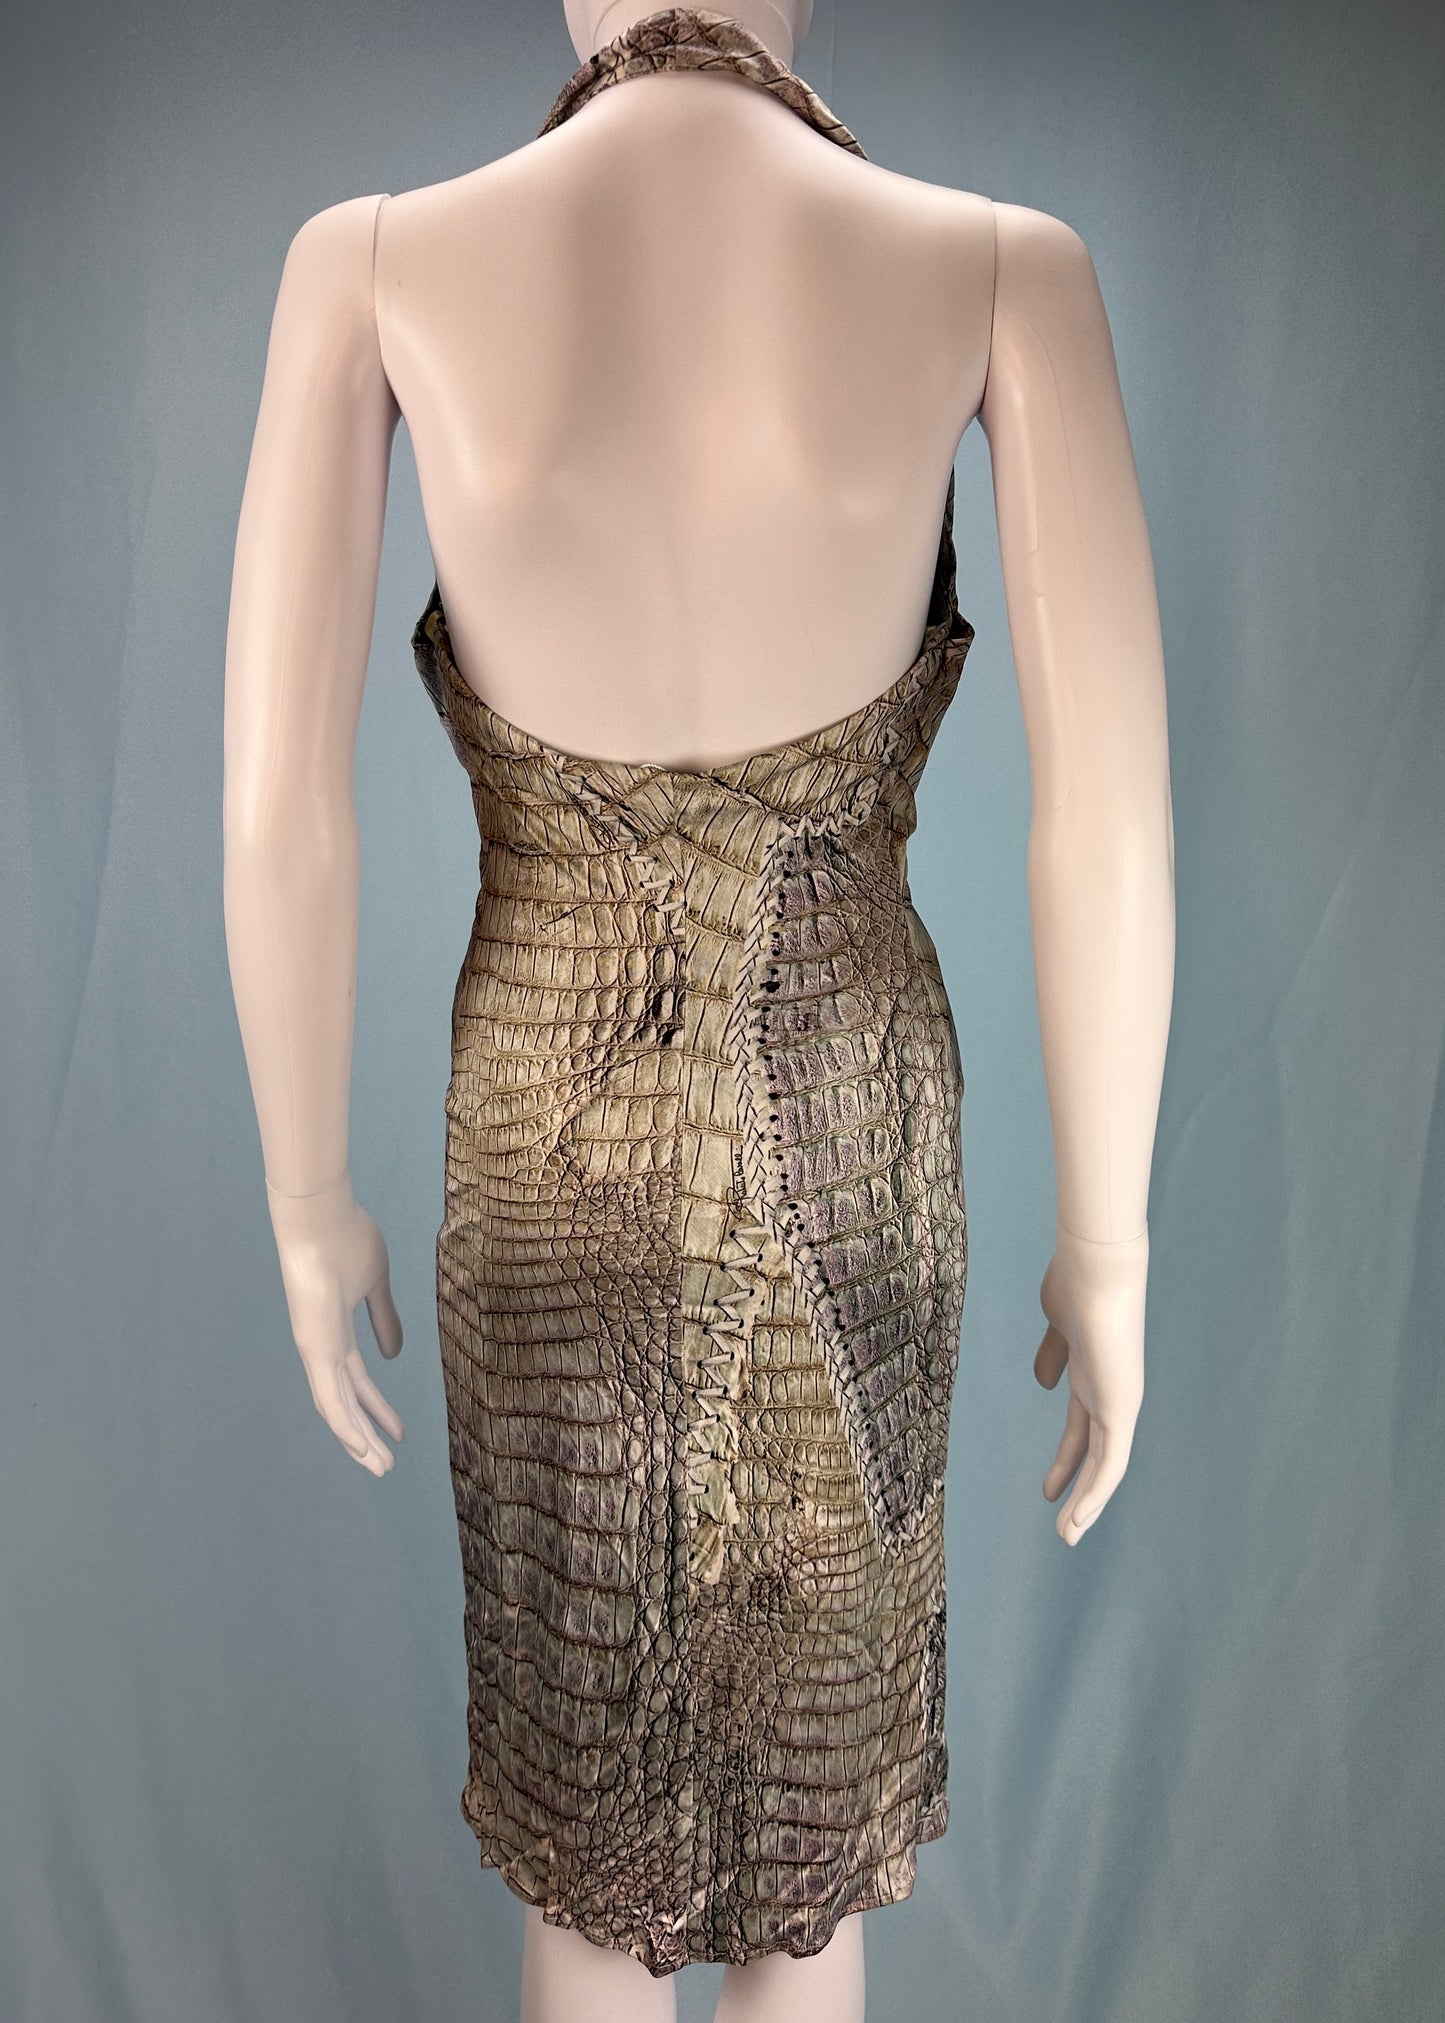 Roberto Cavalli Spring 2011 Snake Print Halter Dress